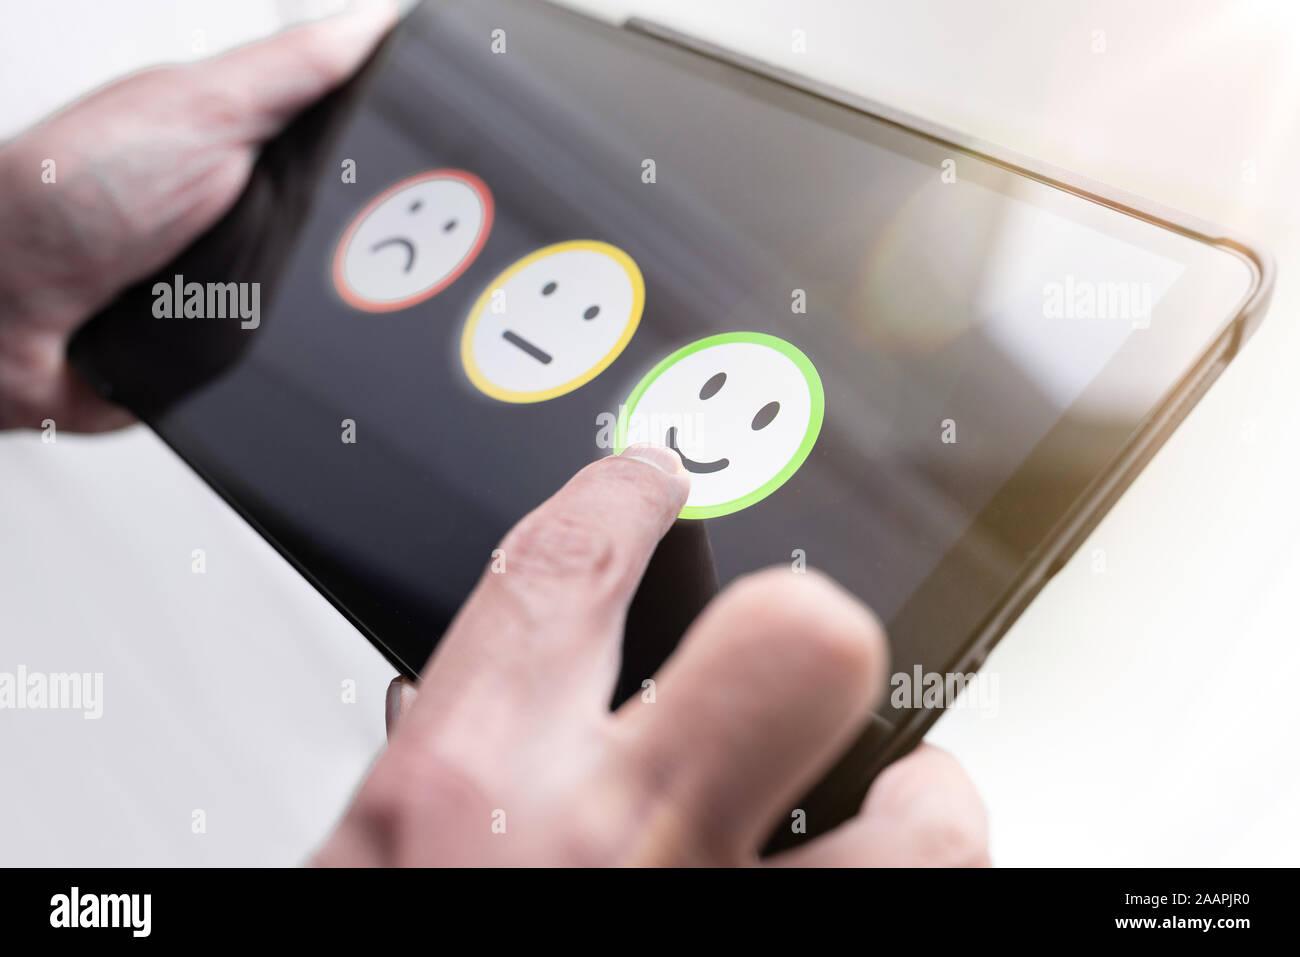 Gerne Person mit positivem Feedback durch Berühren Smiley auf digitalen Tablet-PC Touchscreen, Service Quality Rating Konzept. Stockfoto